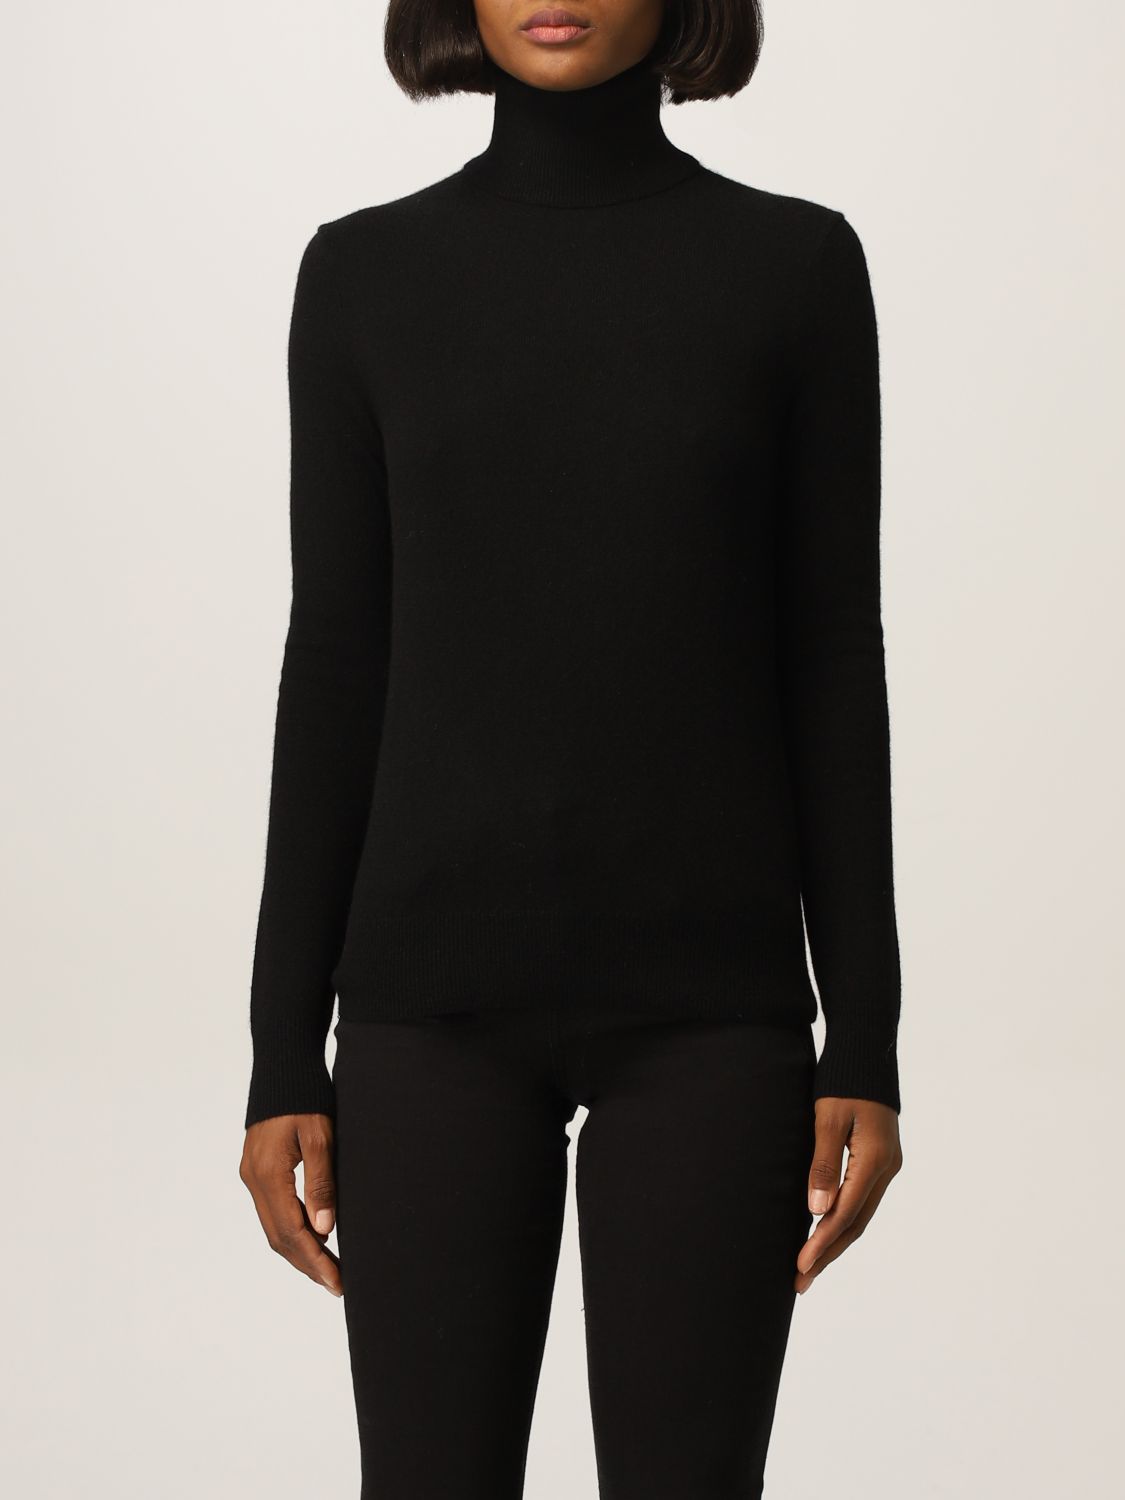 POLO RALPH LAUREN: basic turtleneck - Black | Polo Ralph Lauren sweater  211617667 online on 